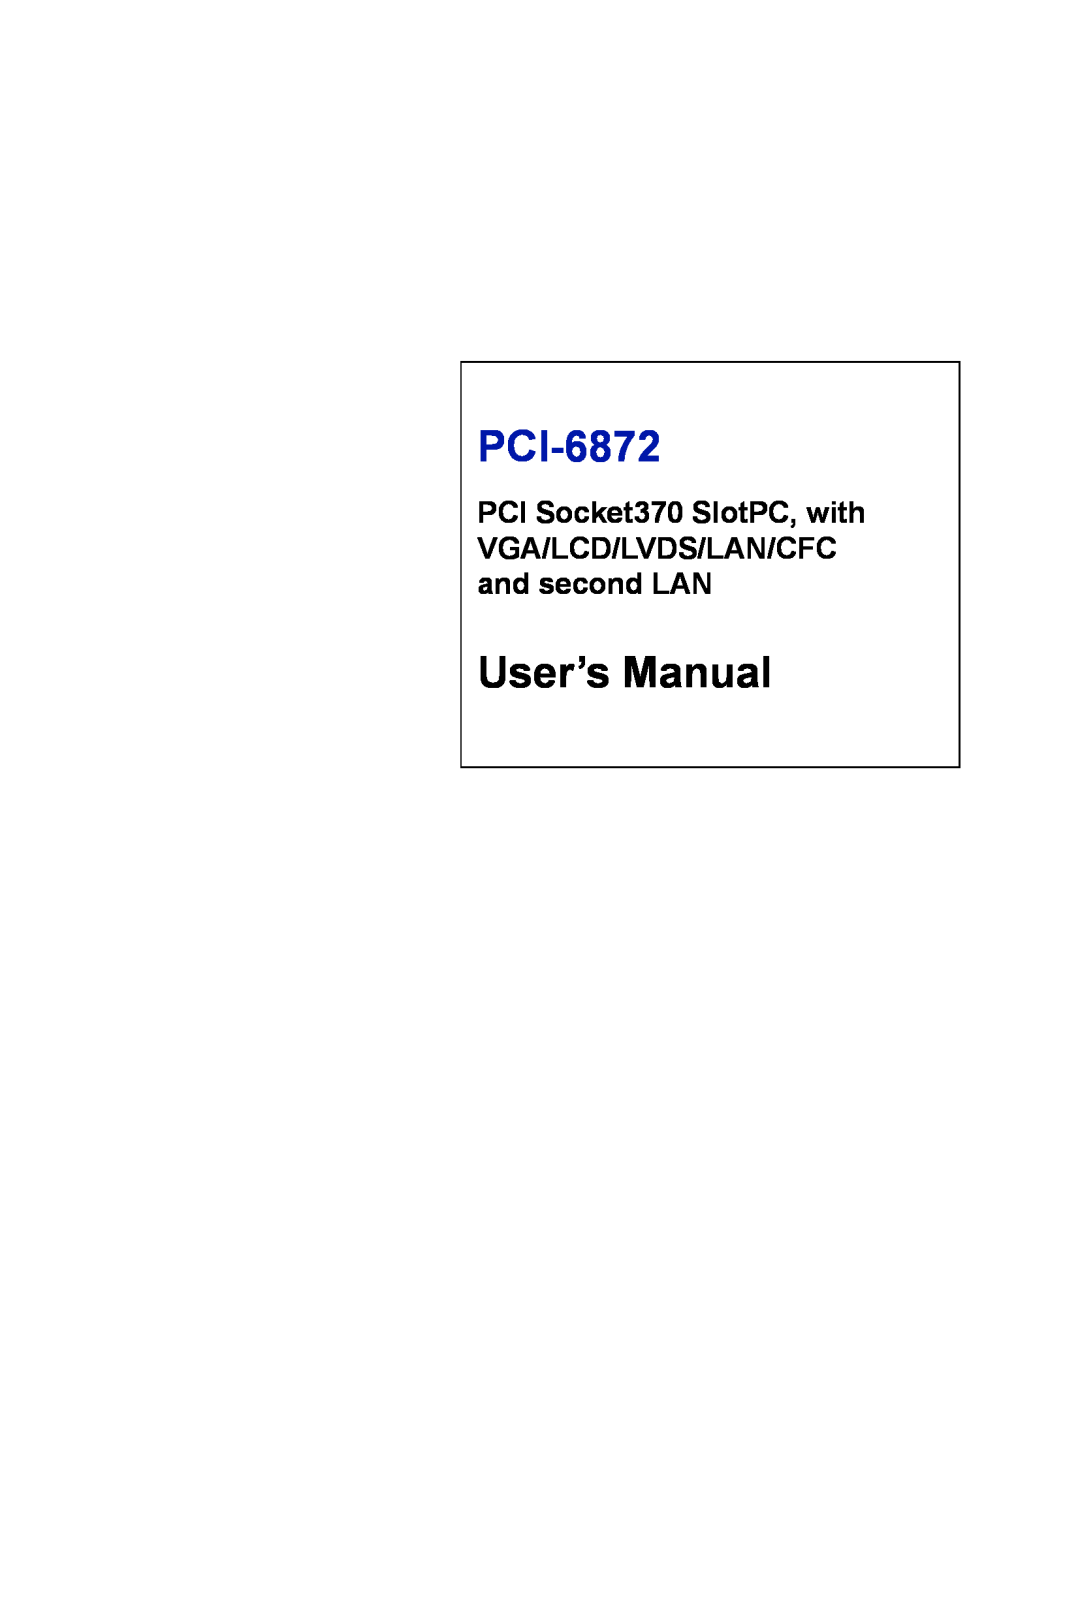 Advantech PCI-6872 user manual User’s Manual, PCI Socket370 SlotPC, with VGA/LCD/LVDS/LAN/CFC and second LAN 